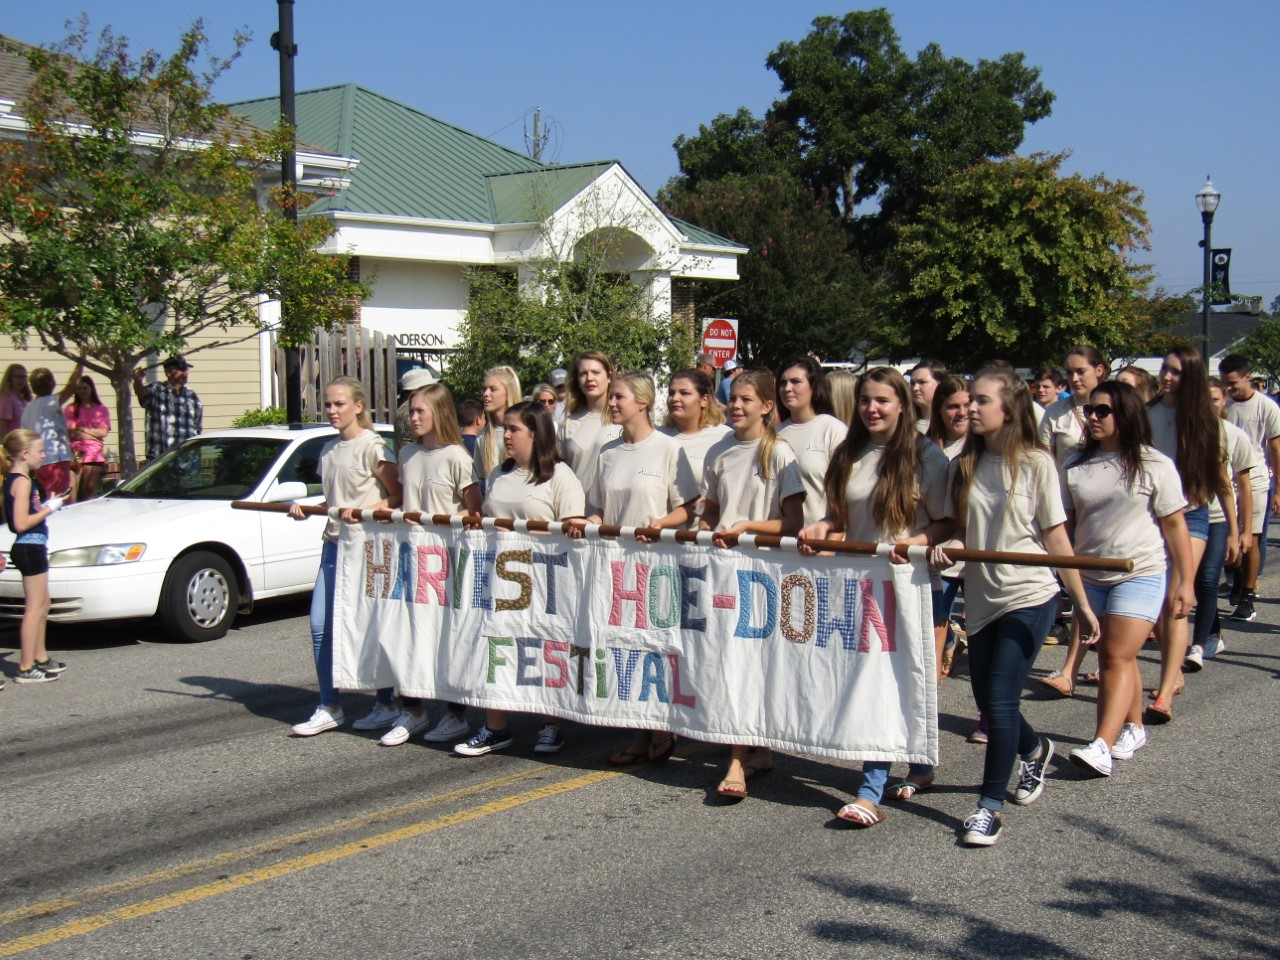 Group of women holding a festival banner